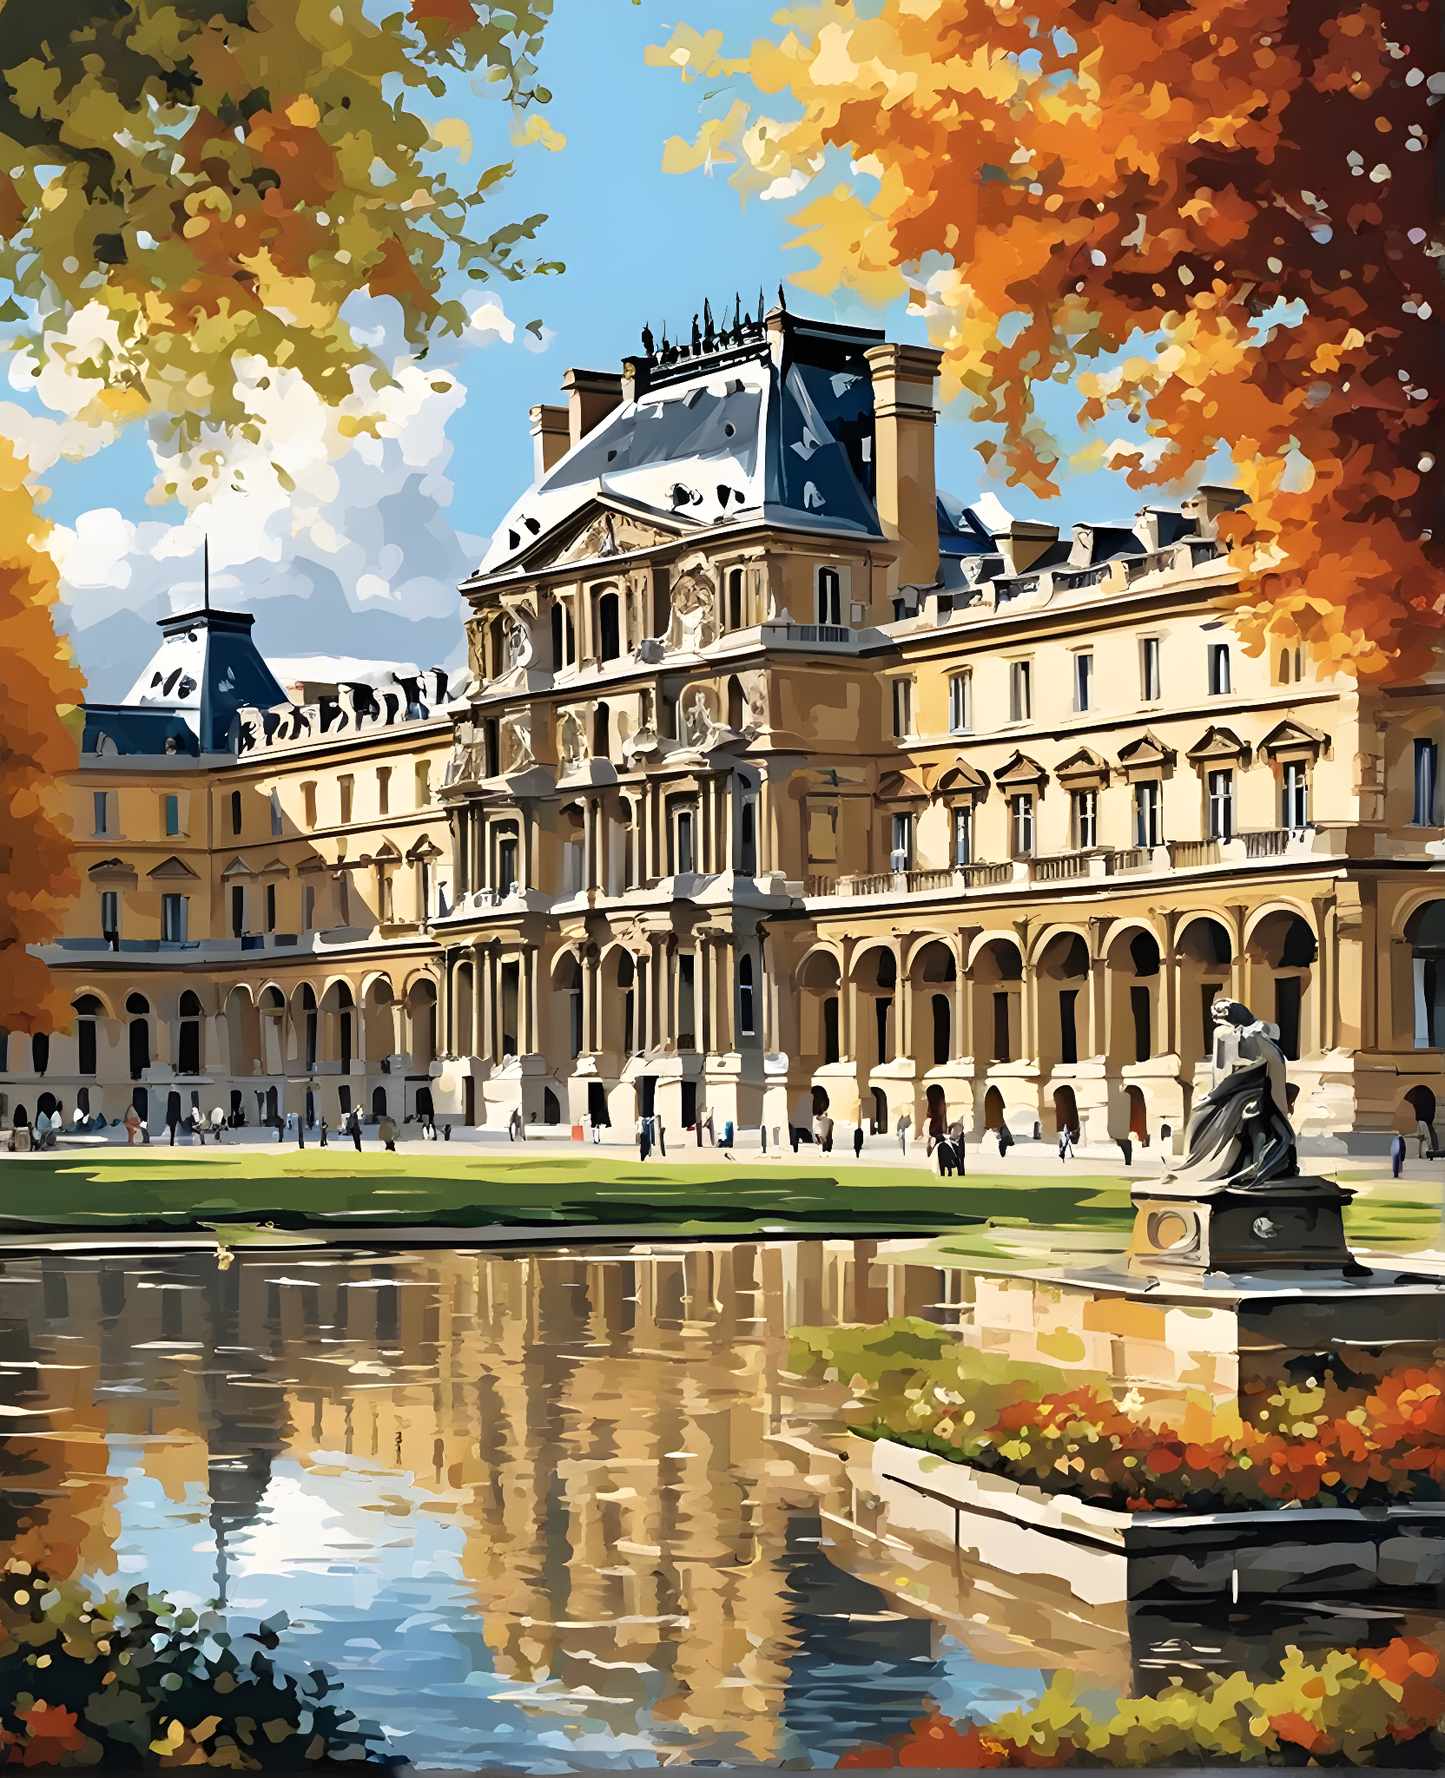 Castles OD - Louvre Palace, France (19) - Van-Go Paint-By-Number Kit